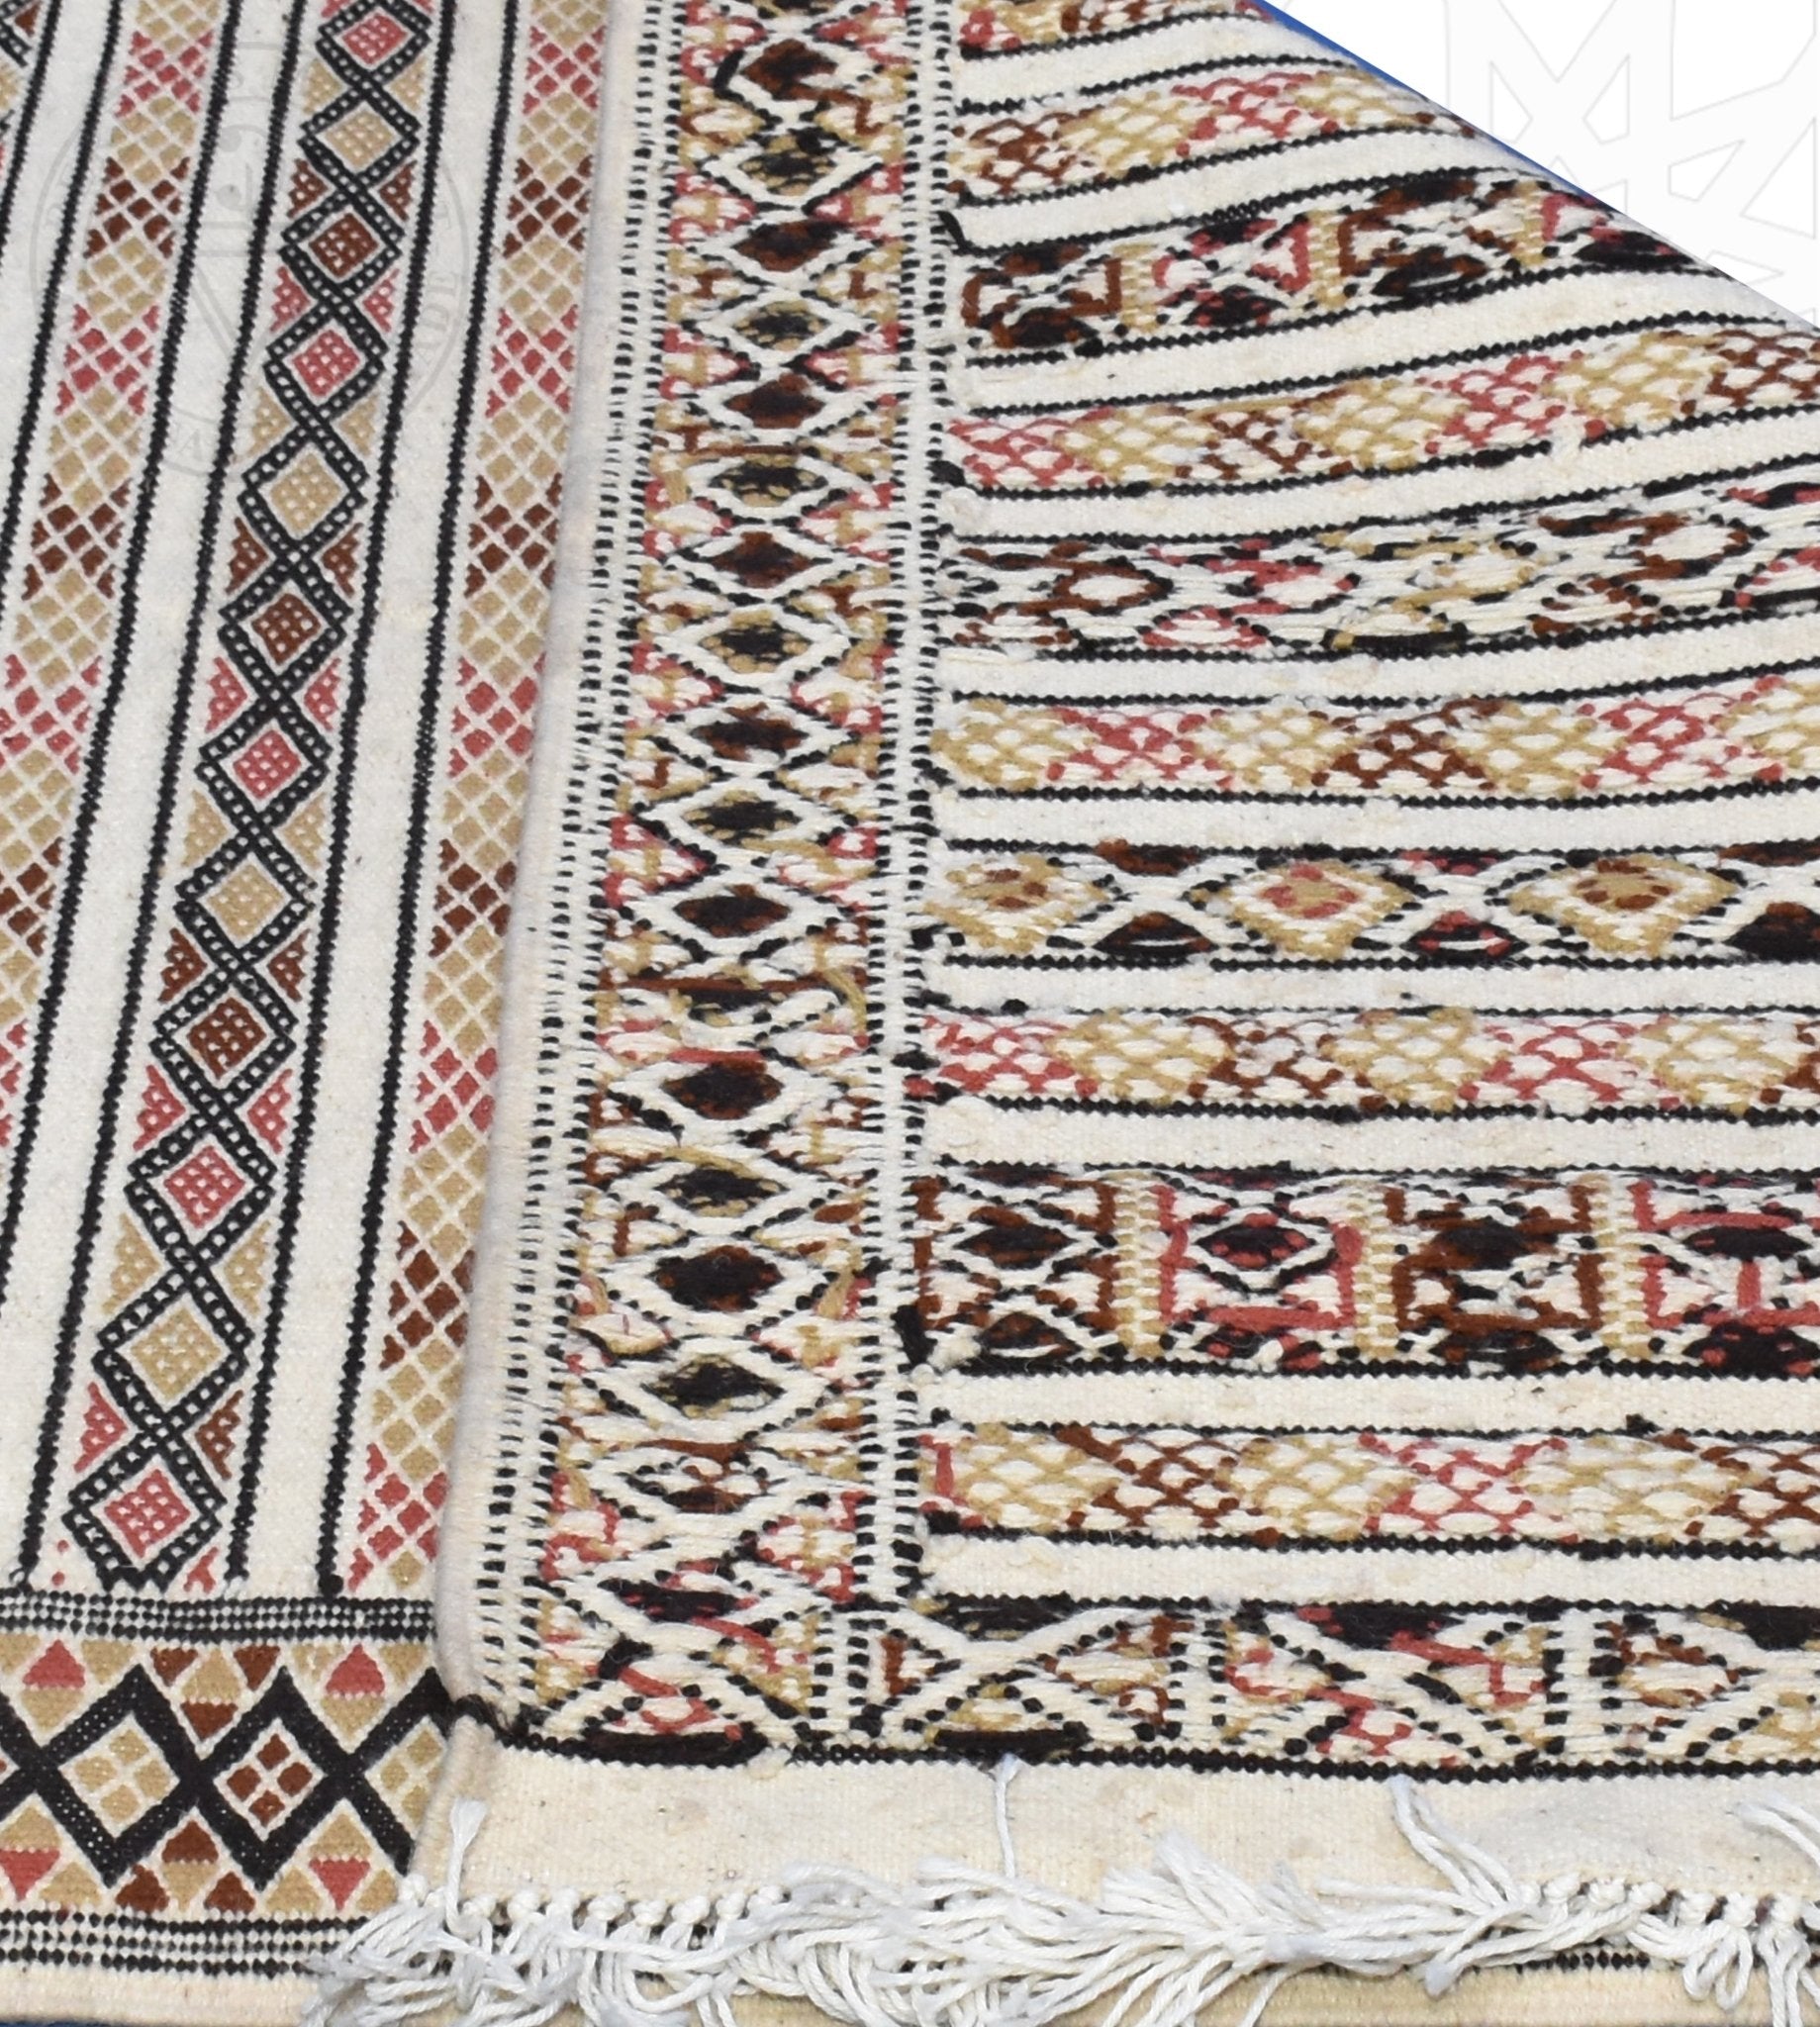 Flatweave kilim hanbal Moroccan rug - 3.94 x 5.42 ft / 120 x 165 cm - Berbers Market